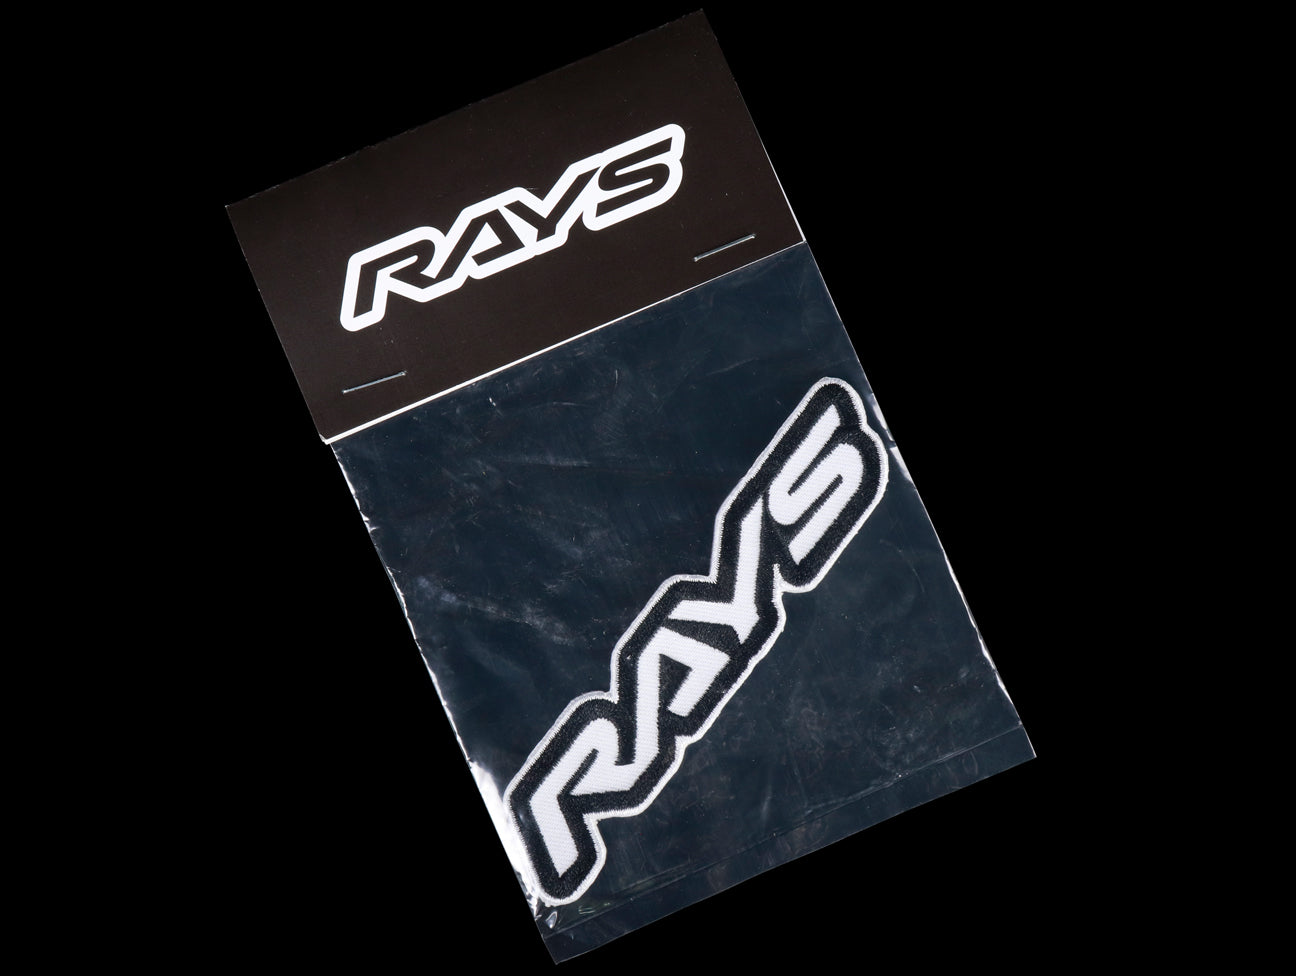 Rays Iron-On Black Patch